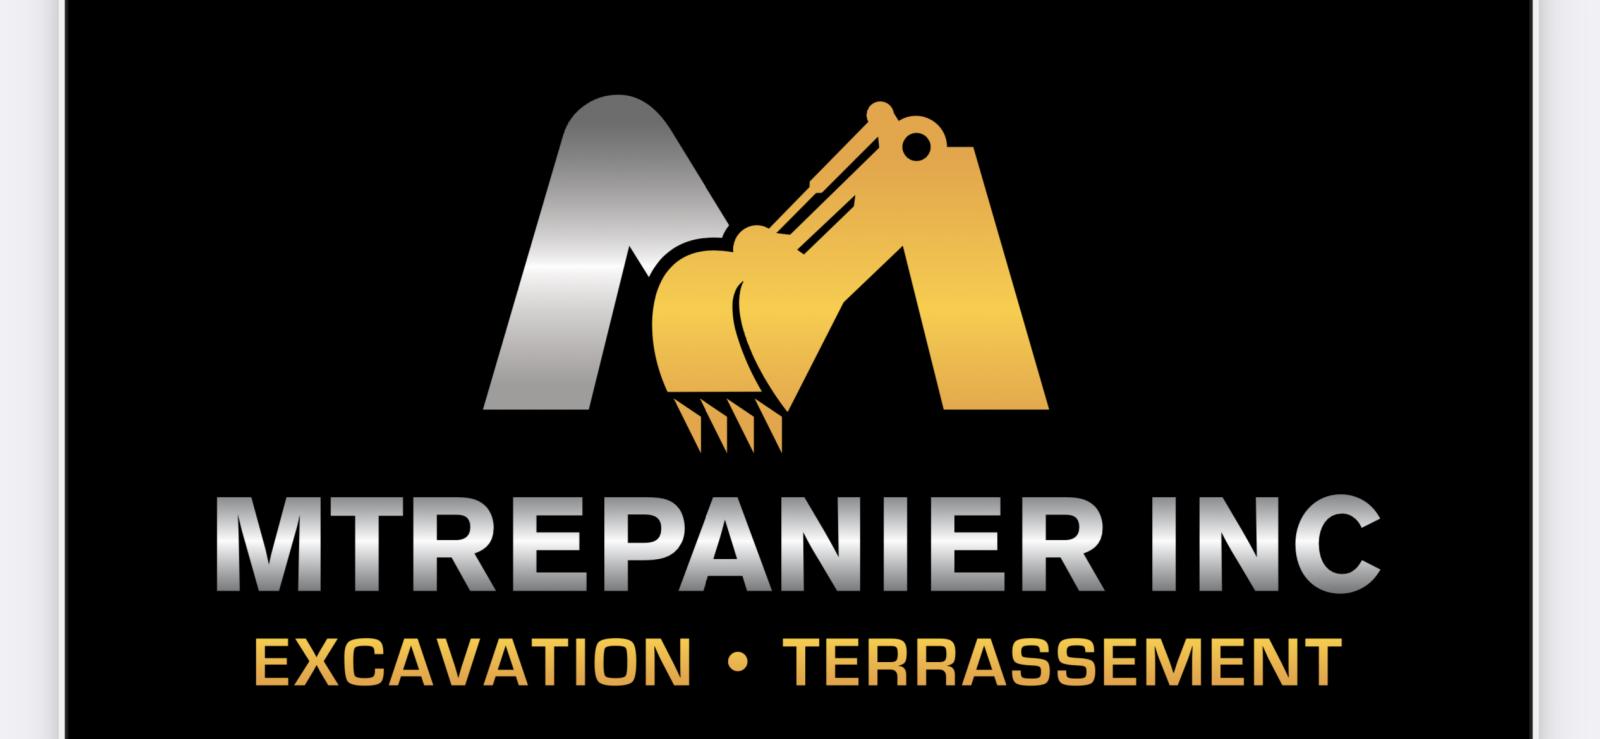 Excavation Mtrepanier inc Logo